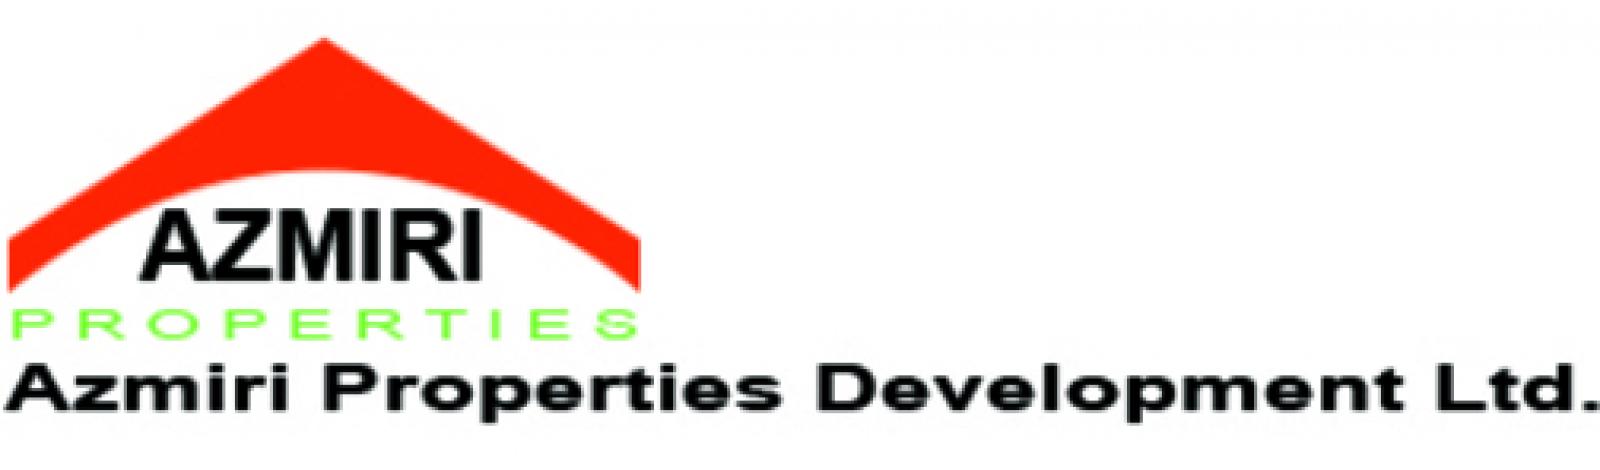 Azmiri Properties Development Ltd. banner